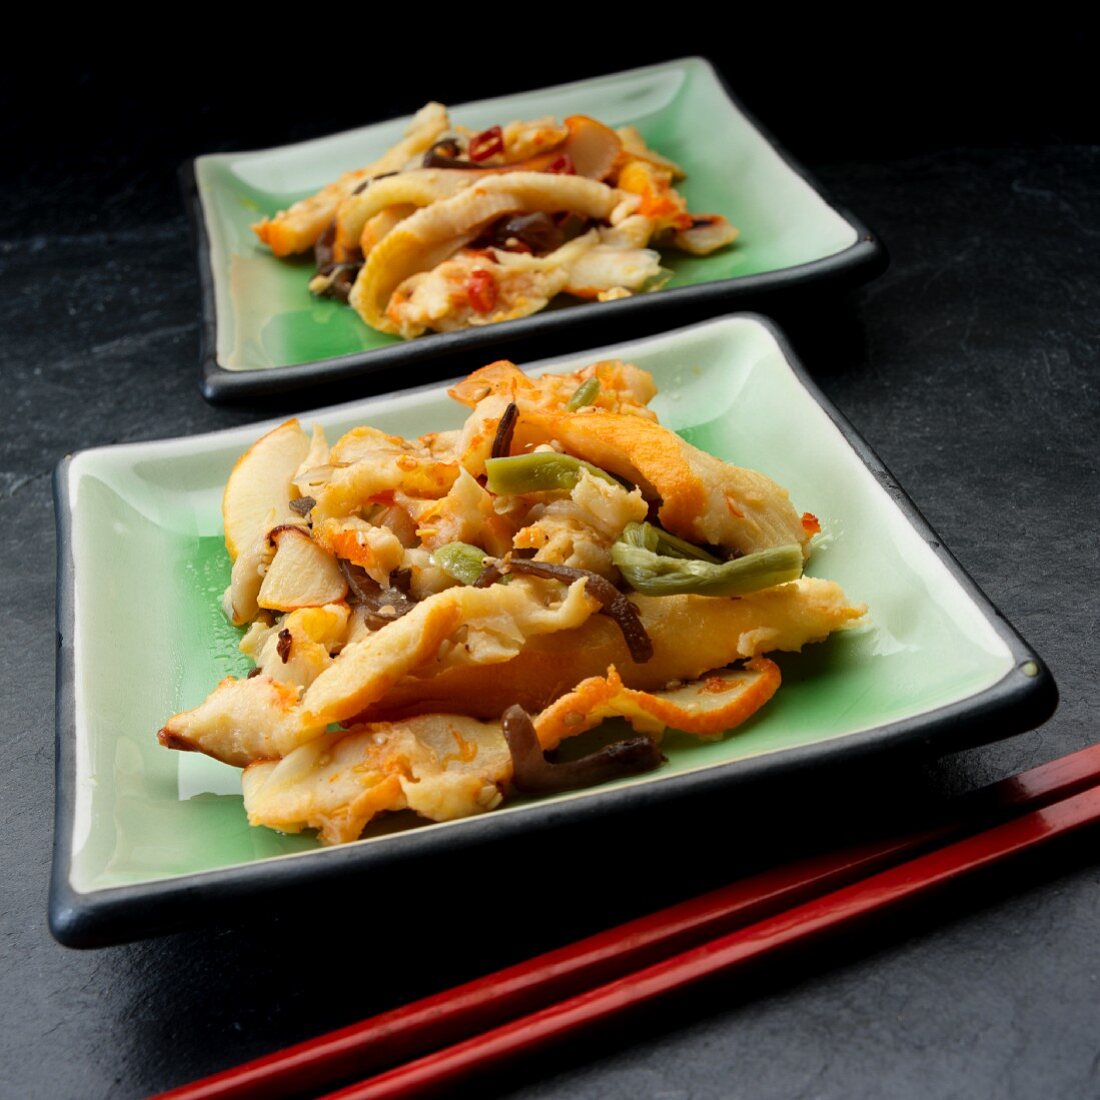 Chuka ika sansai (Japenese squid salad with vegetables and sesame seeds)